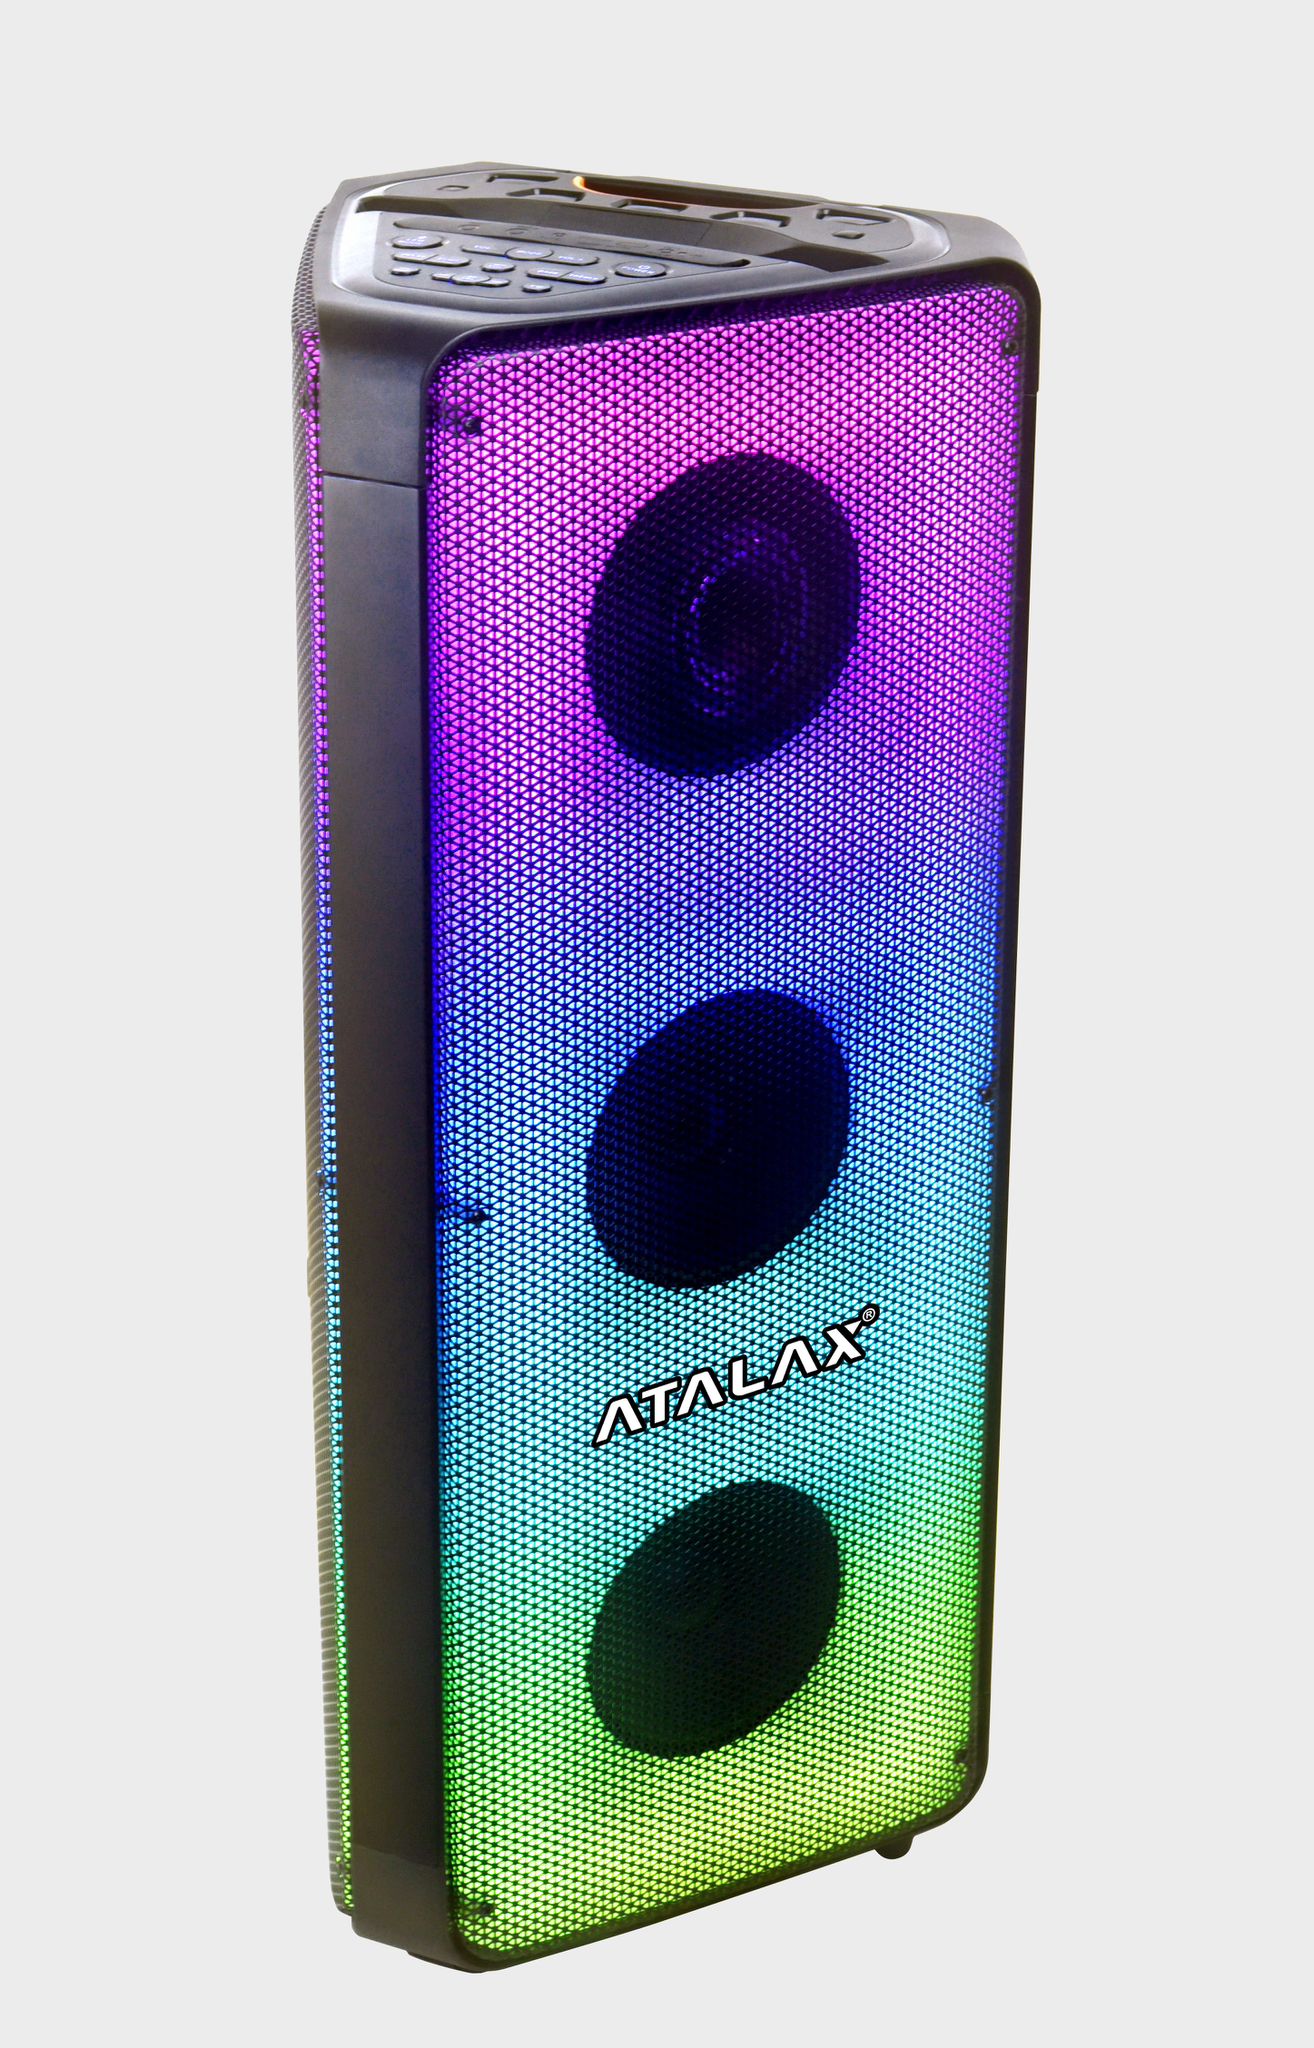 Atalax Rave Wireless Speaker 4 x 6.5" Subwoofer